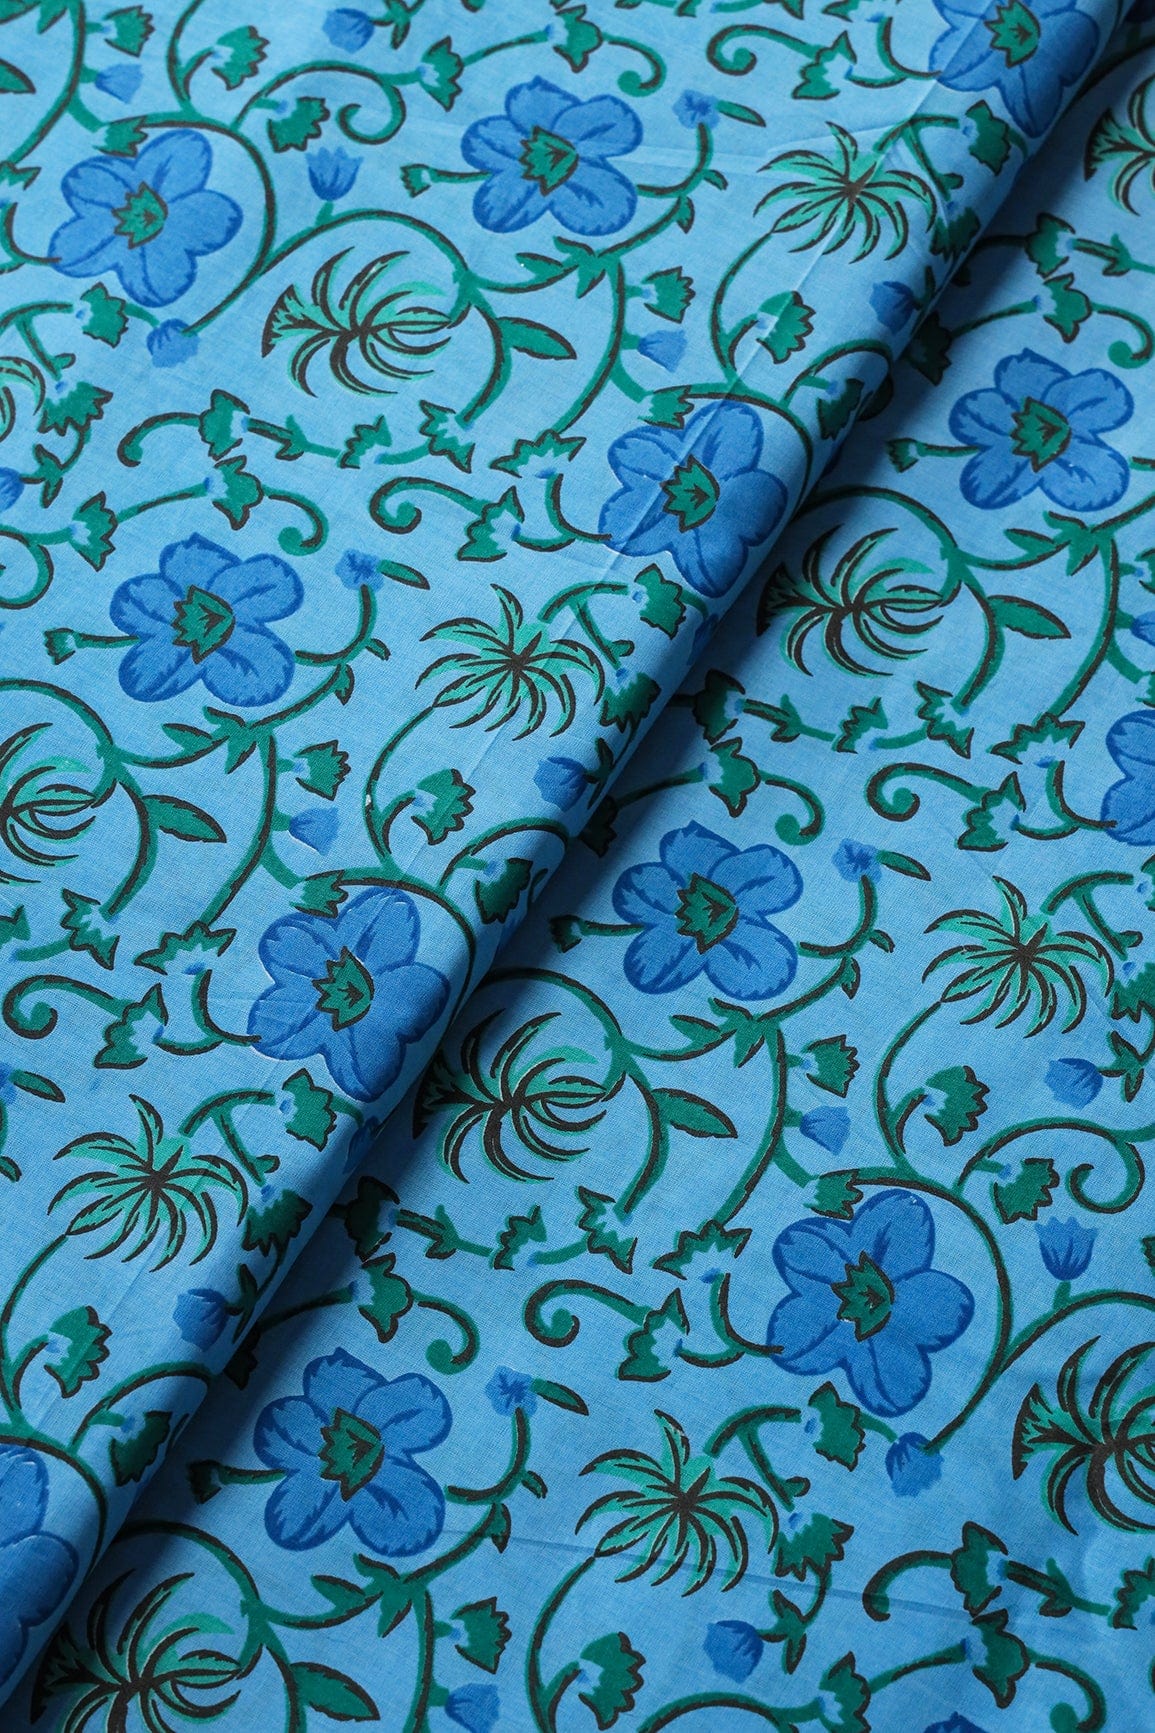 doeraa Prints Azzure Blue And Carolina Blue Floral Print On Pure Mul Cotton Fabric